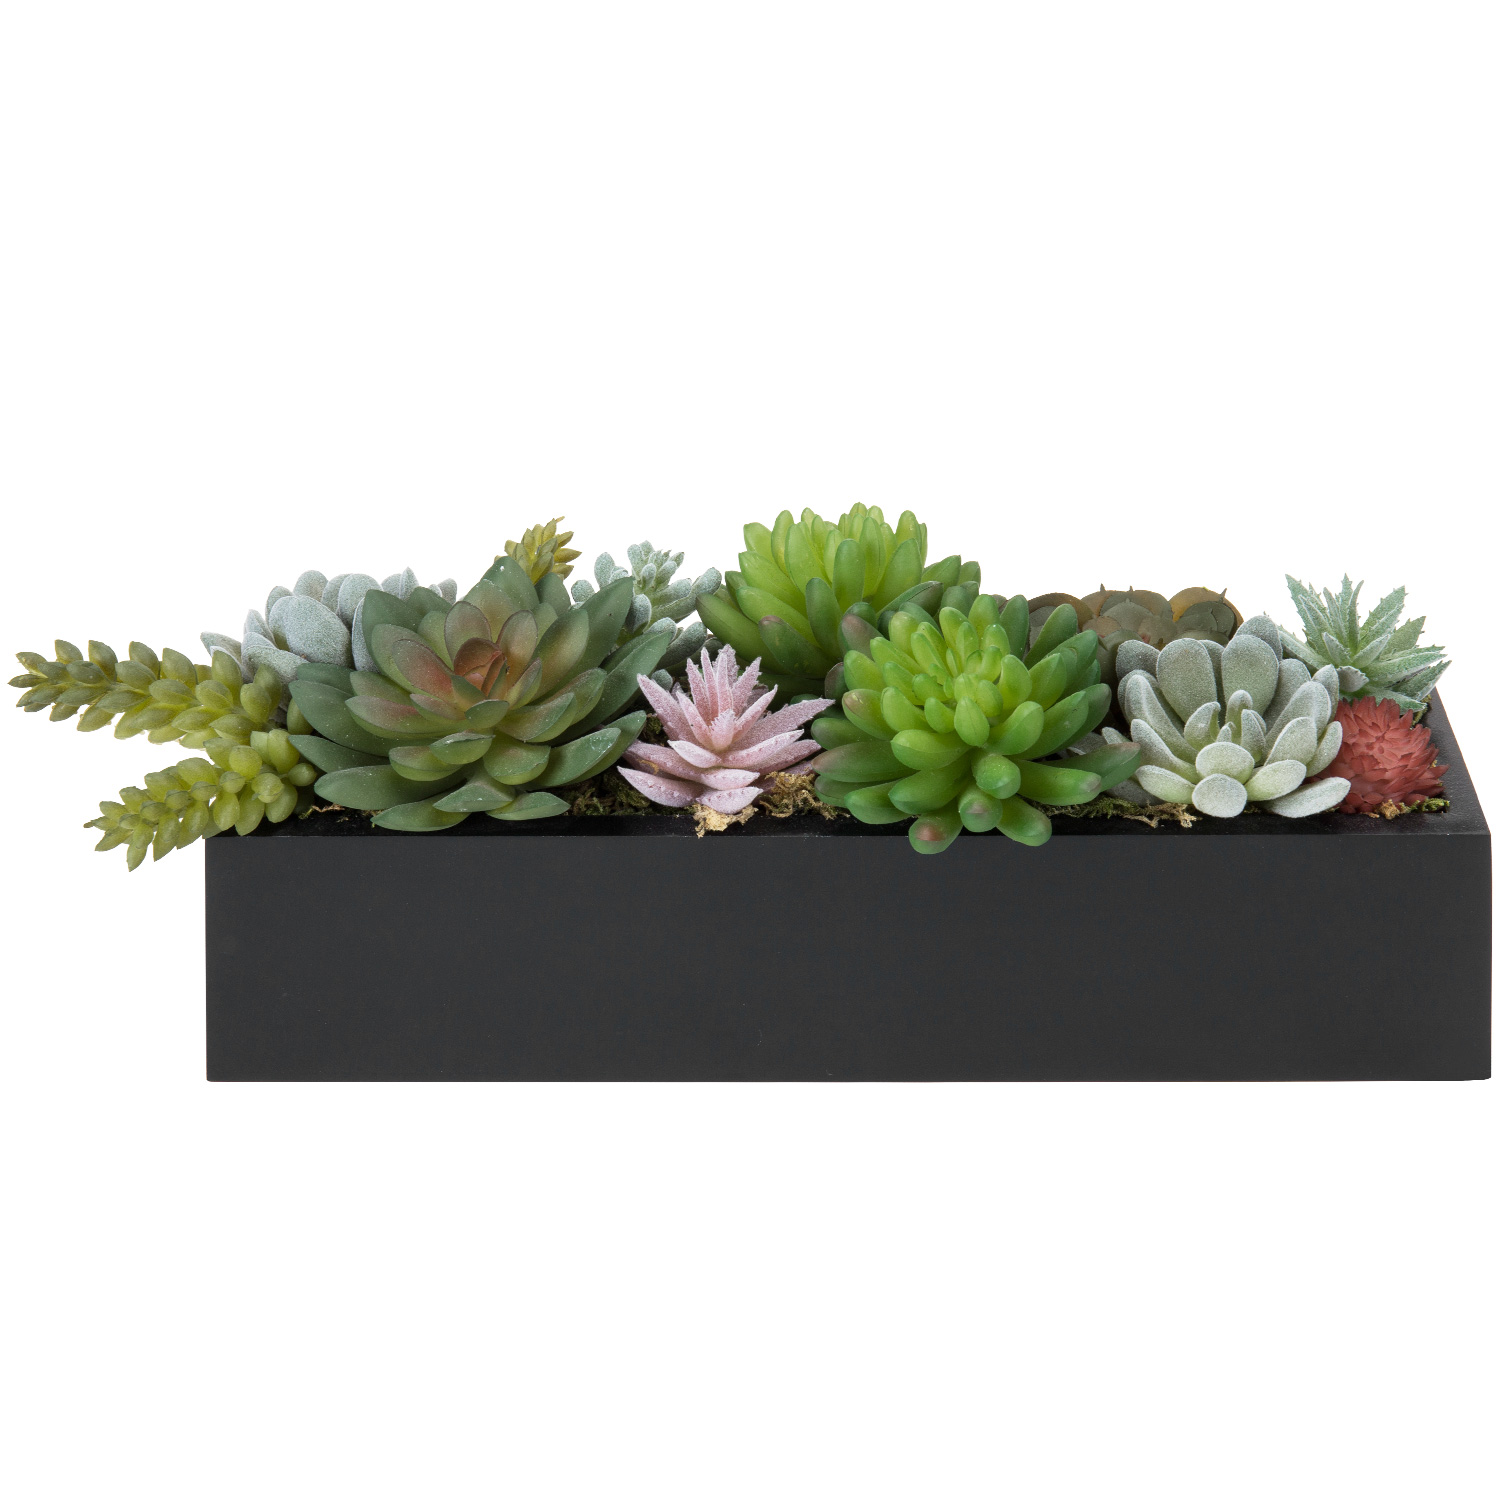 MyGift 12 Inch Modern Artificial Succulent Plants Arrangement Centerpiece in Black Rectangular Wood Planter Box - image 1 of 5